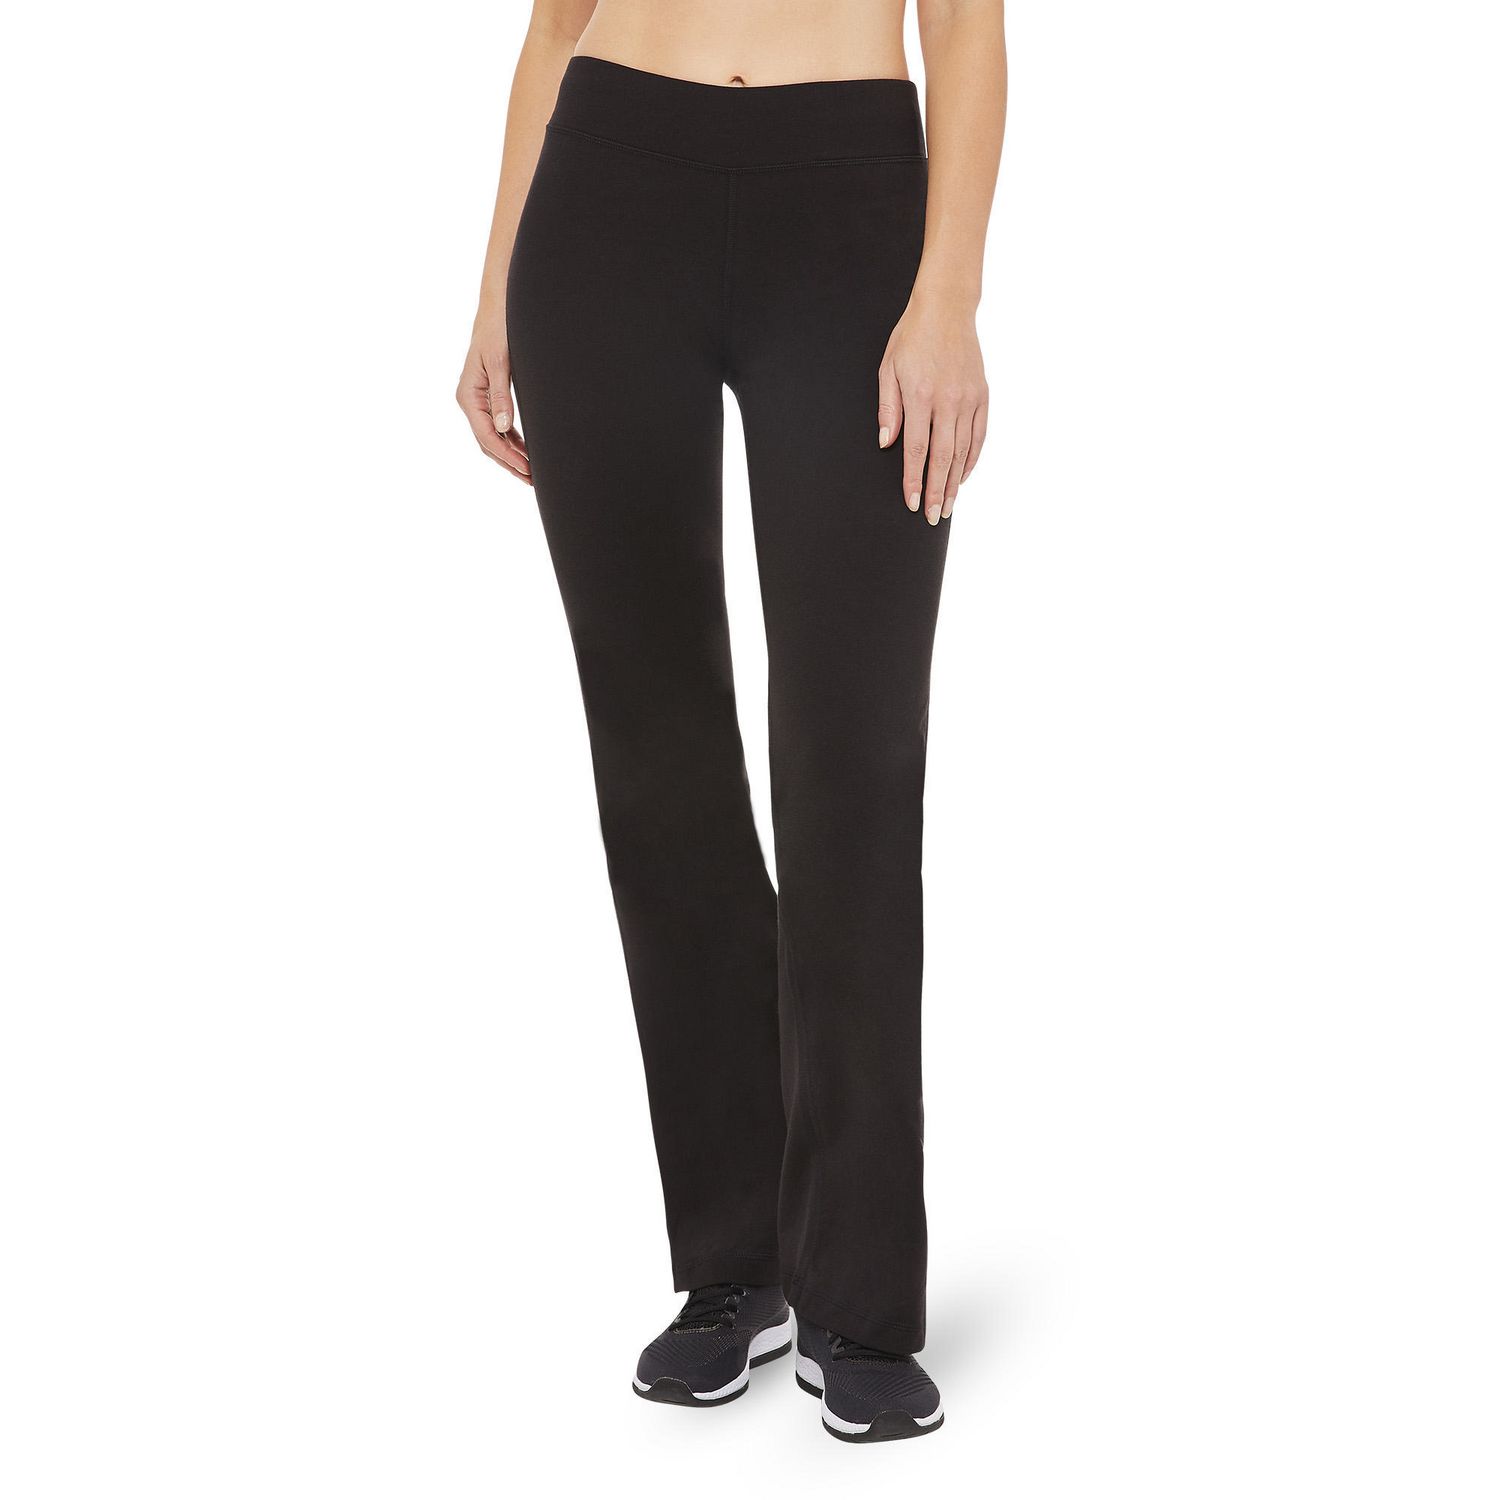 a&m .com: JOYSPELS Yoga Pants for Women, Bootcut Work Pants